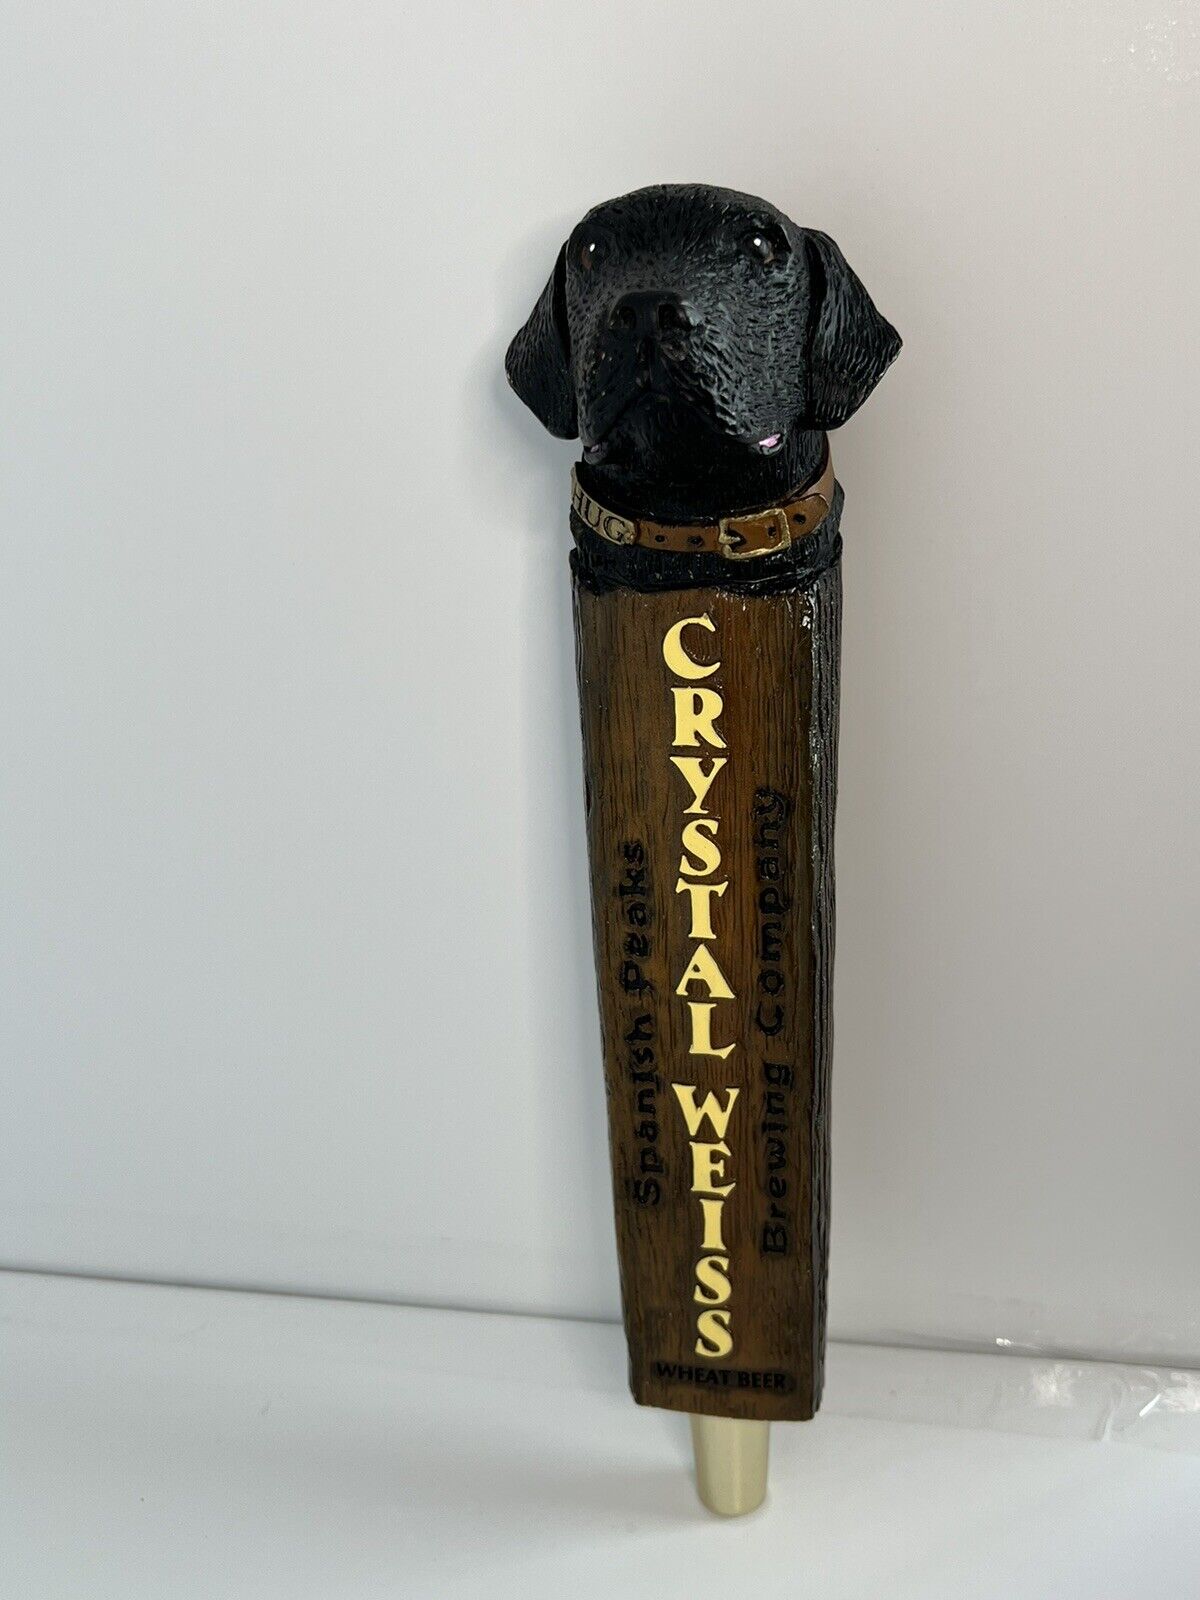 Crystal Weiss Spanish Peaks Brewing Company Beer Tap Handle Draft Knob Black Dog